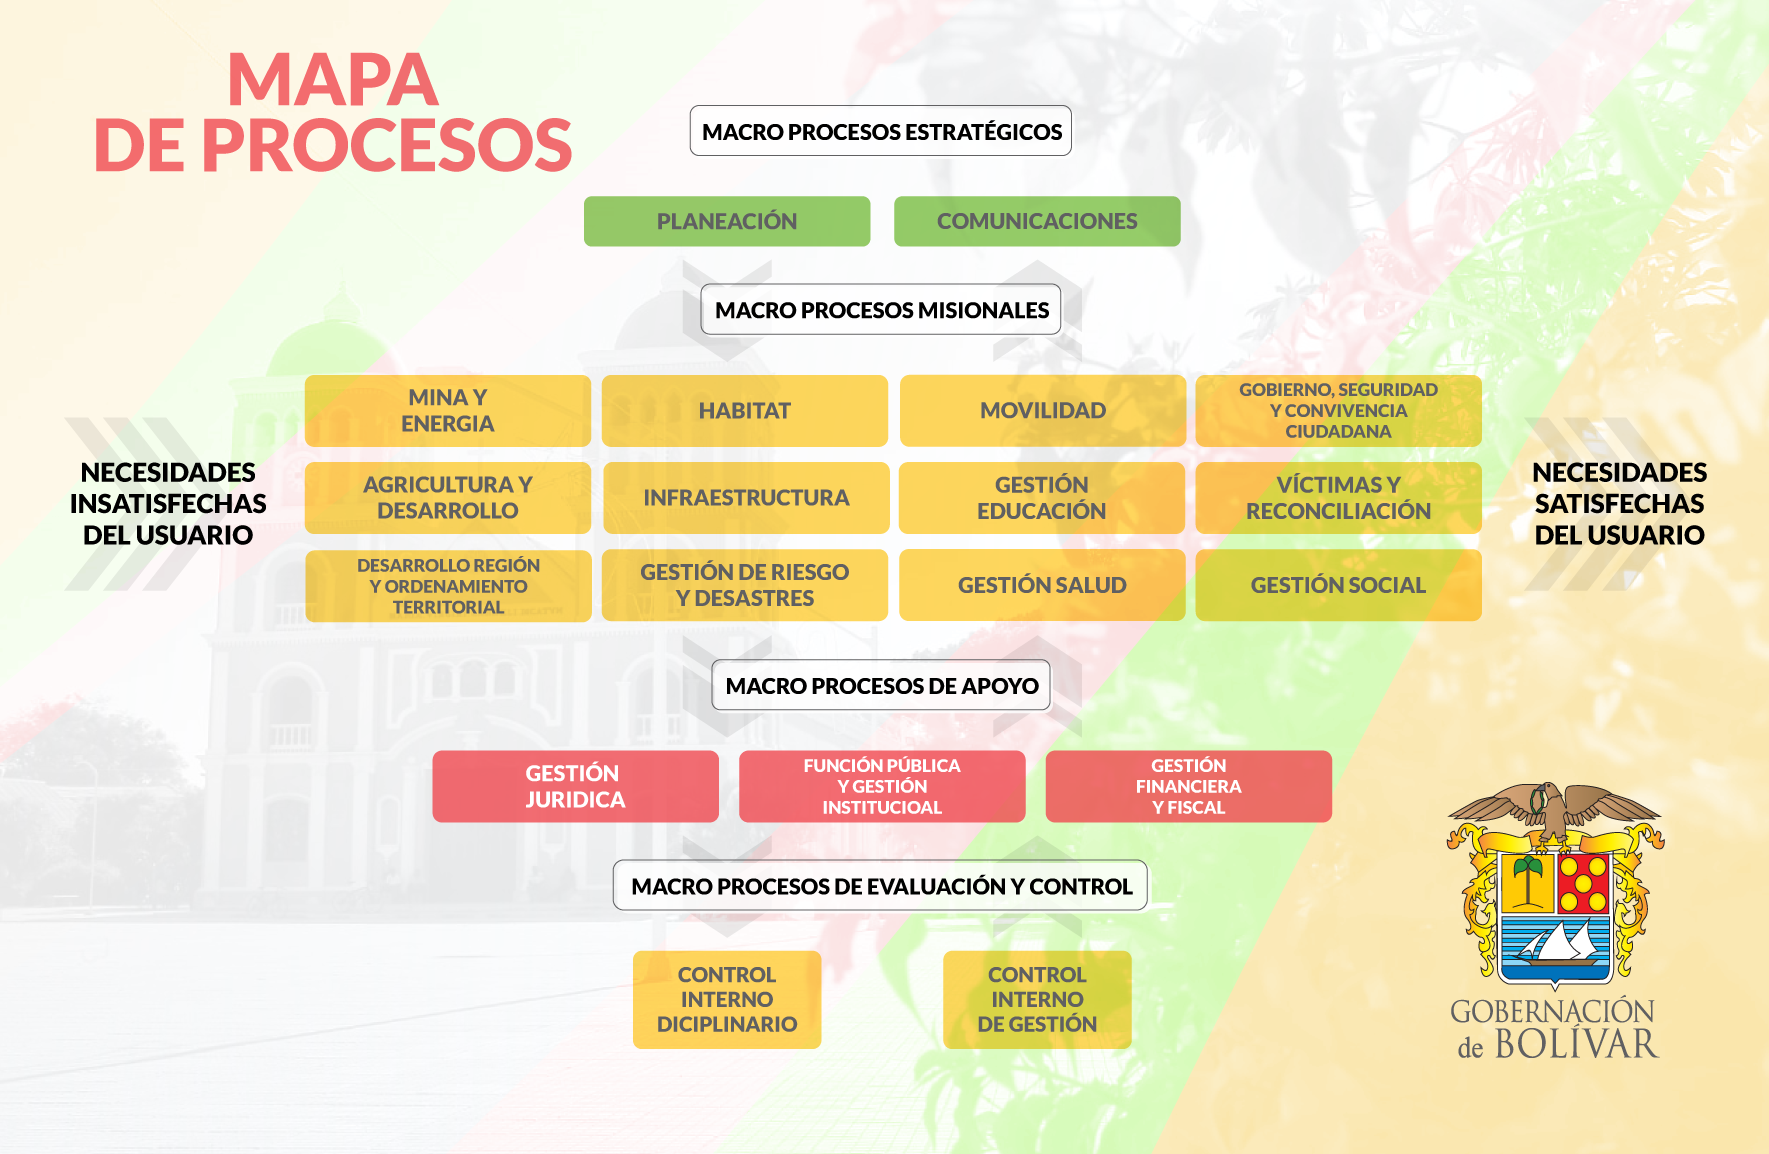 Mapa de Procesos de la Gobernación de Bolívar - 2020